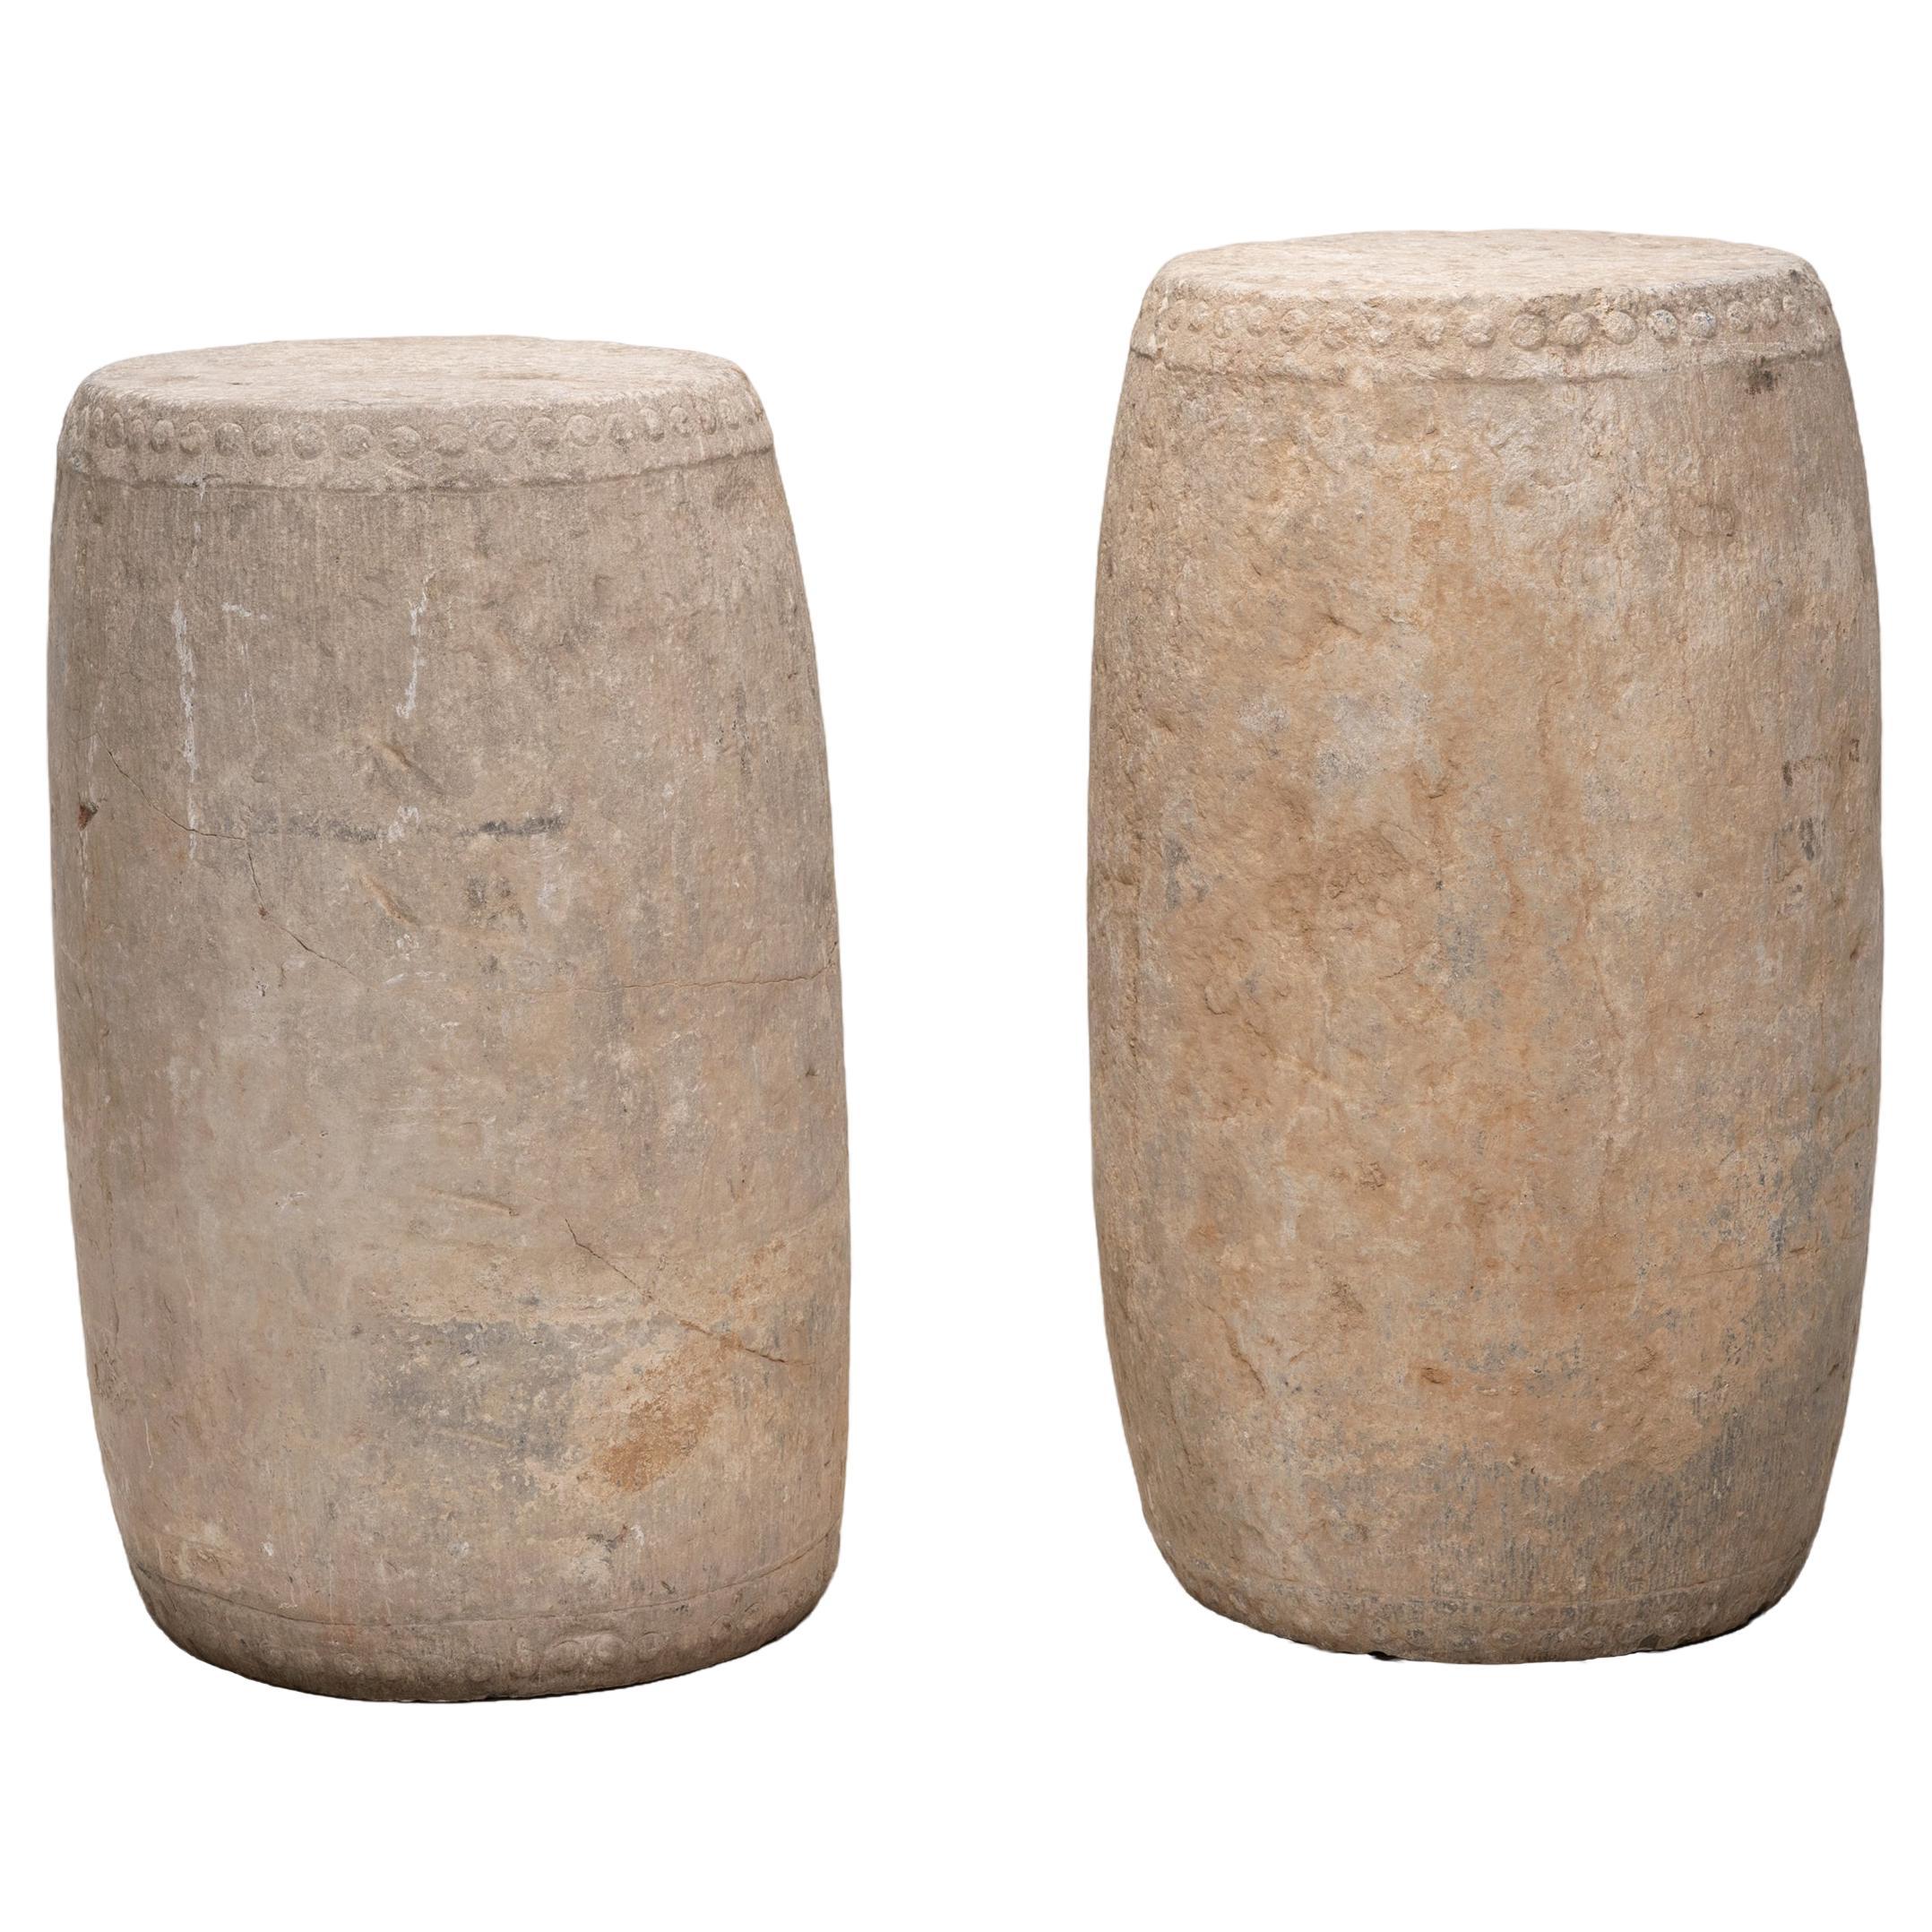 Pair of Monumental Chinese Limestone Drums, c. 1800